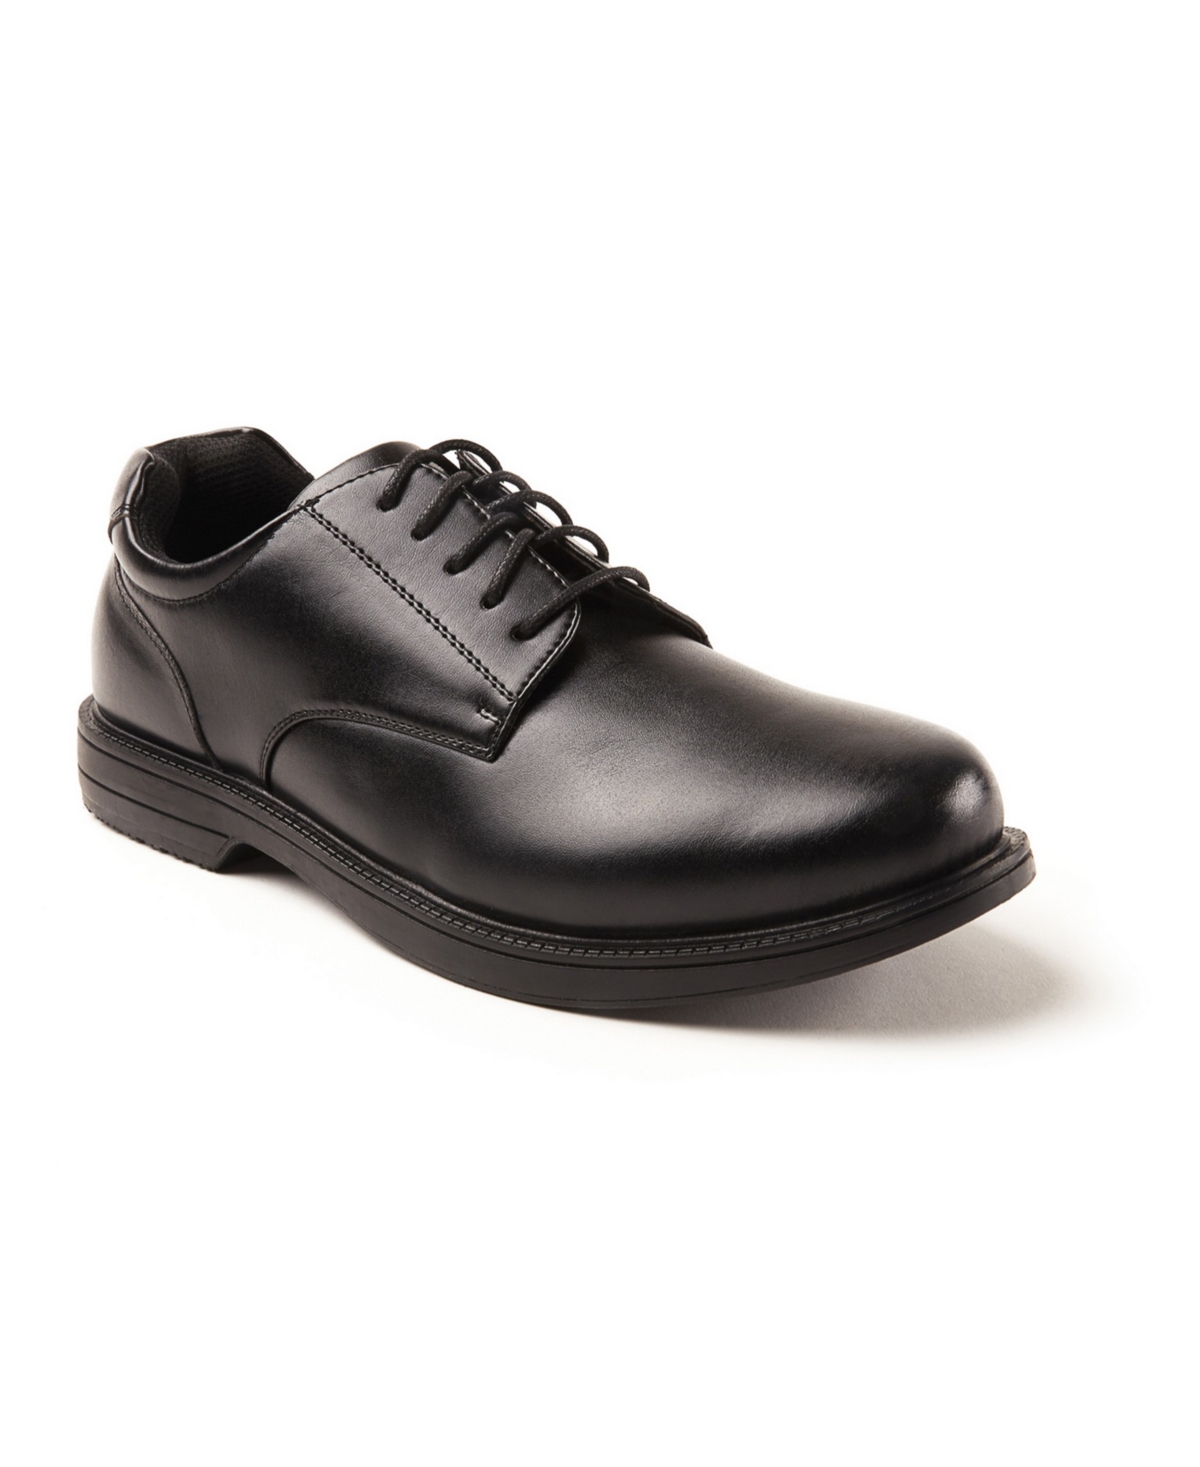 Men's Crown Water Resistant Dress Casual Oxford Shoe - Black